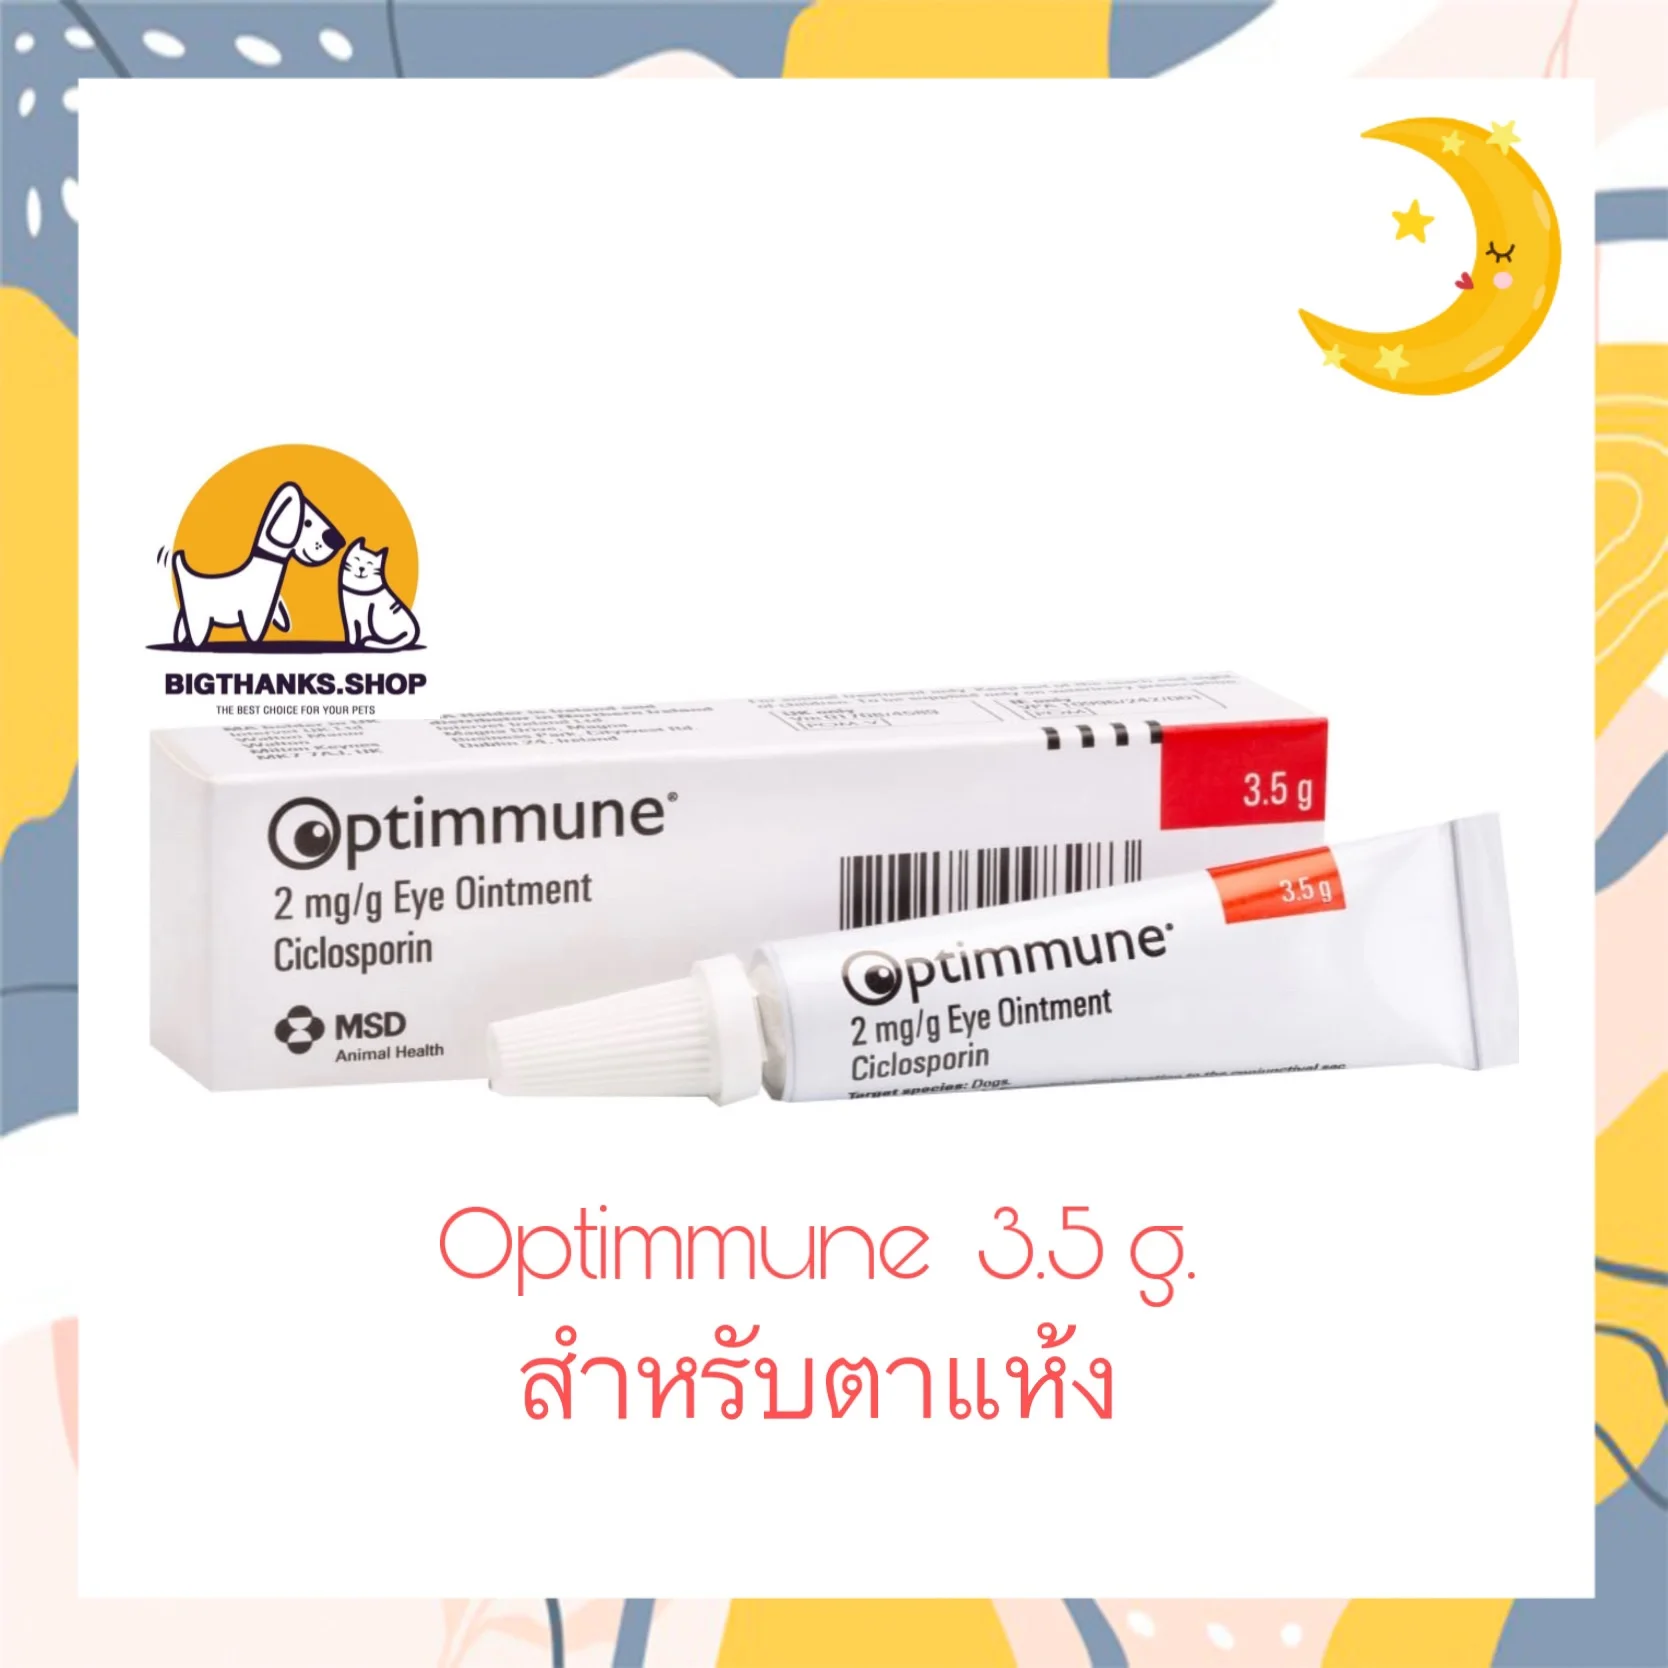 Optimmune ophthalmic ointment MSD 3.5 g. Exp.03/22 (1 หลอด/tube)